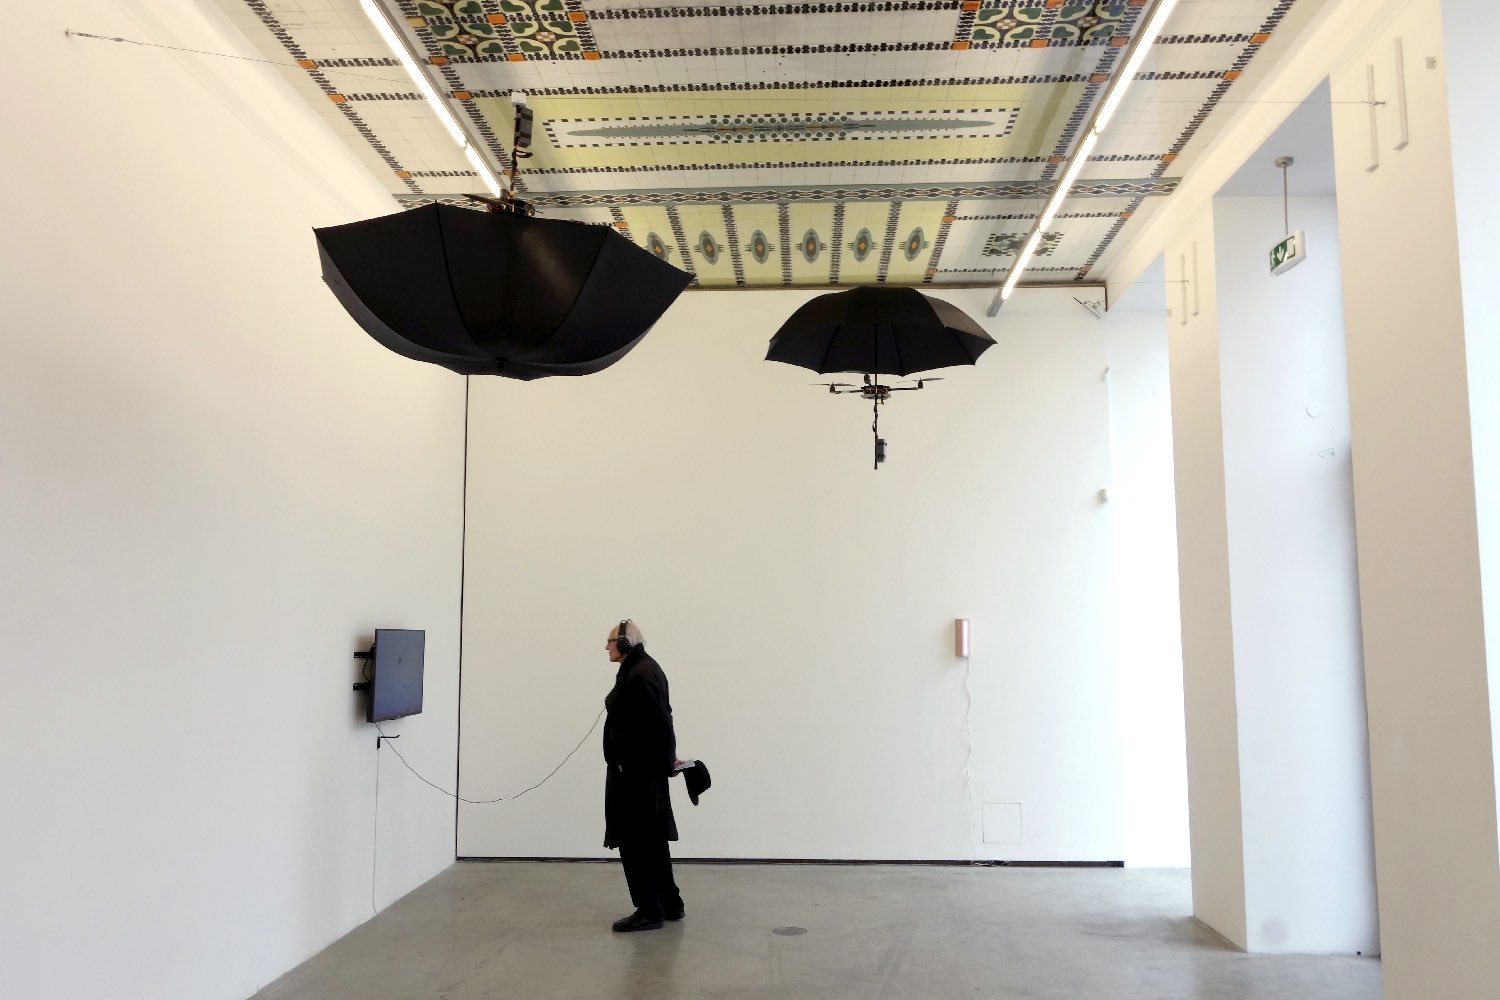 umbrella drones exhibition at the angewandte innovation lab  vienna